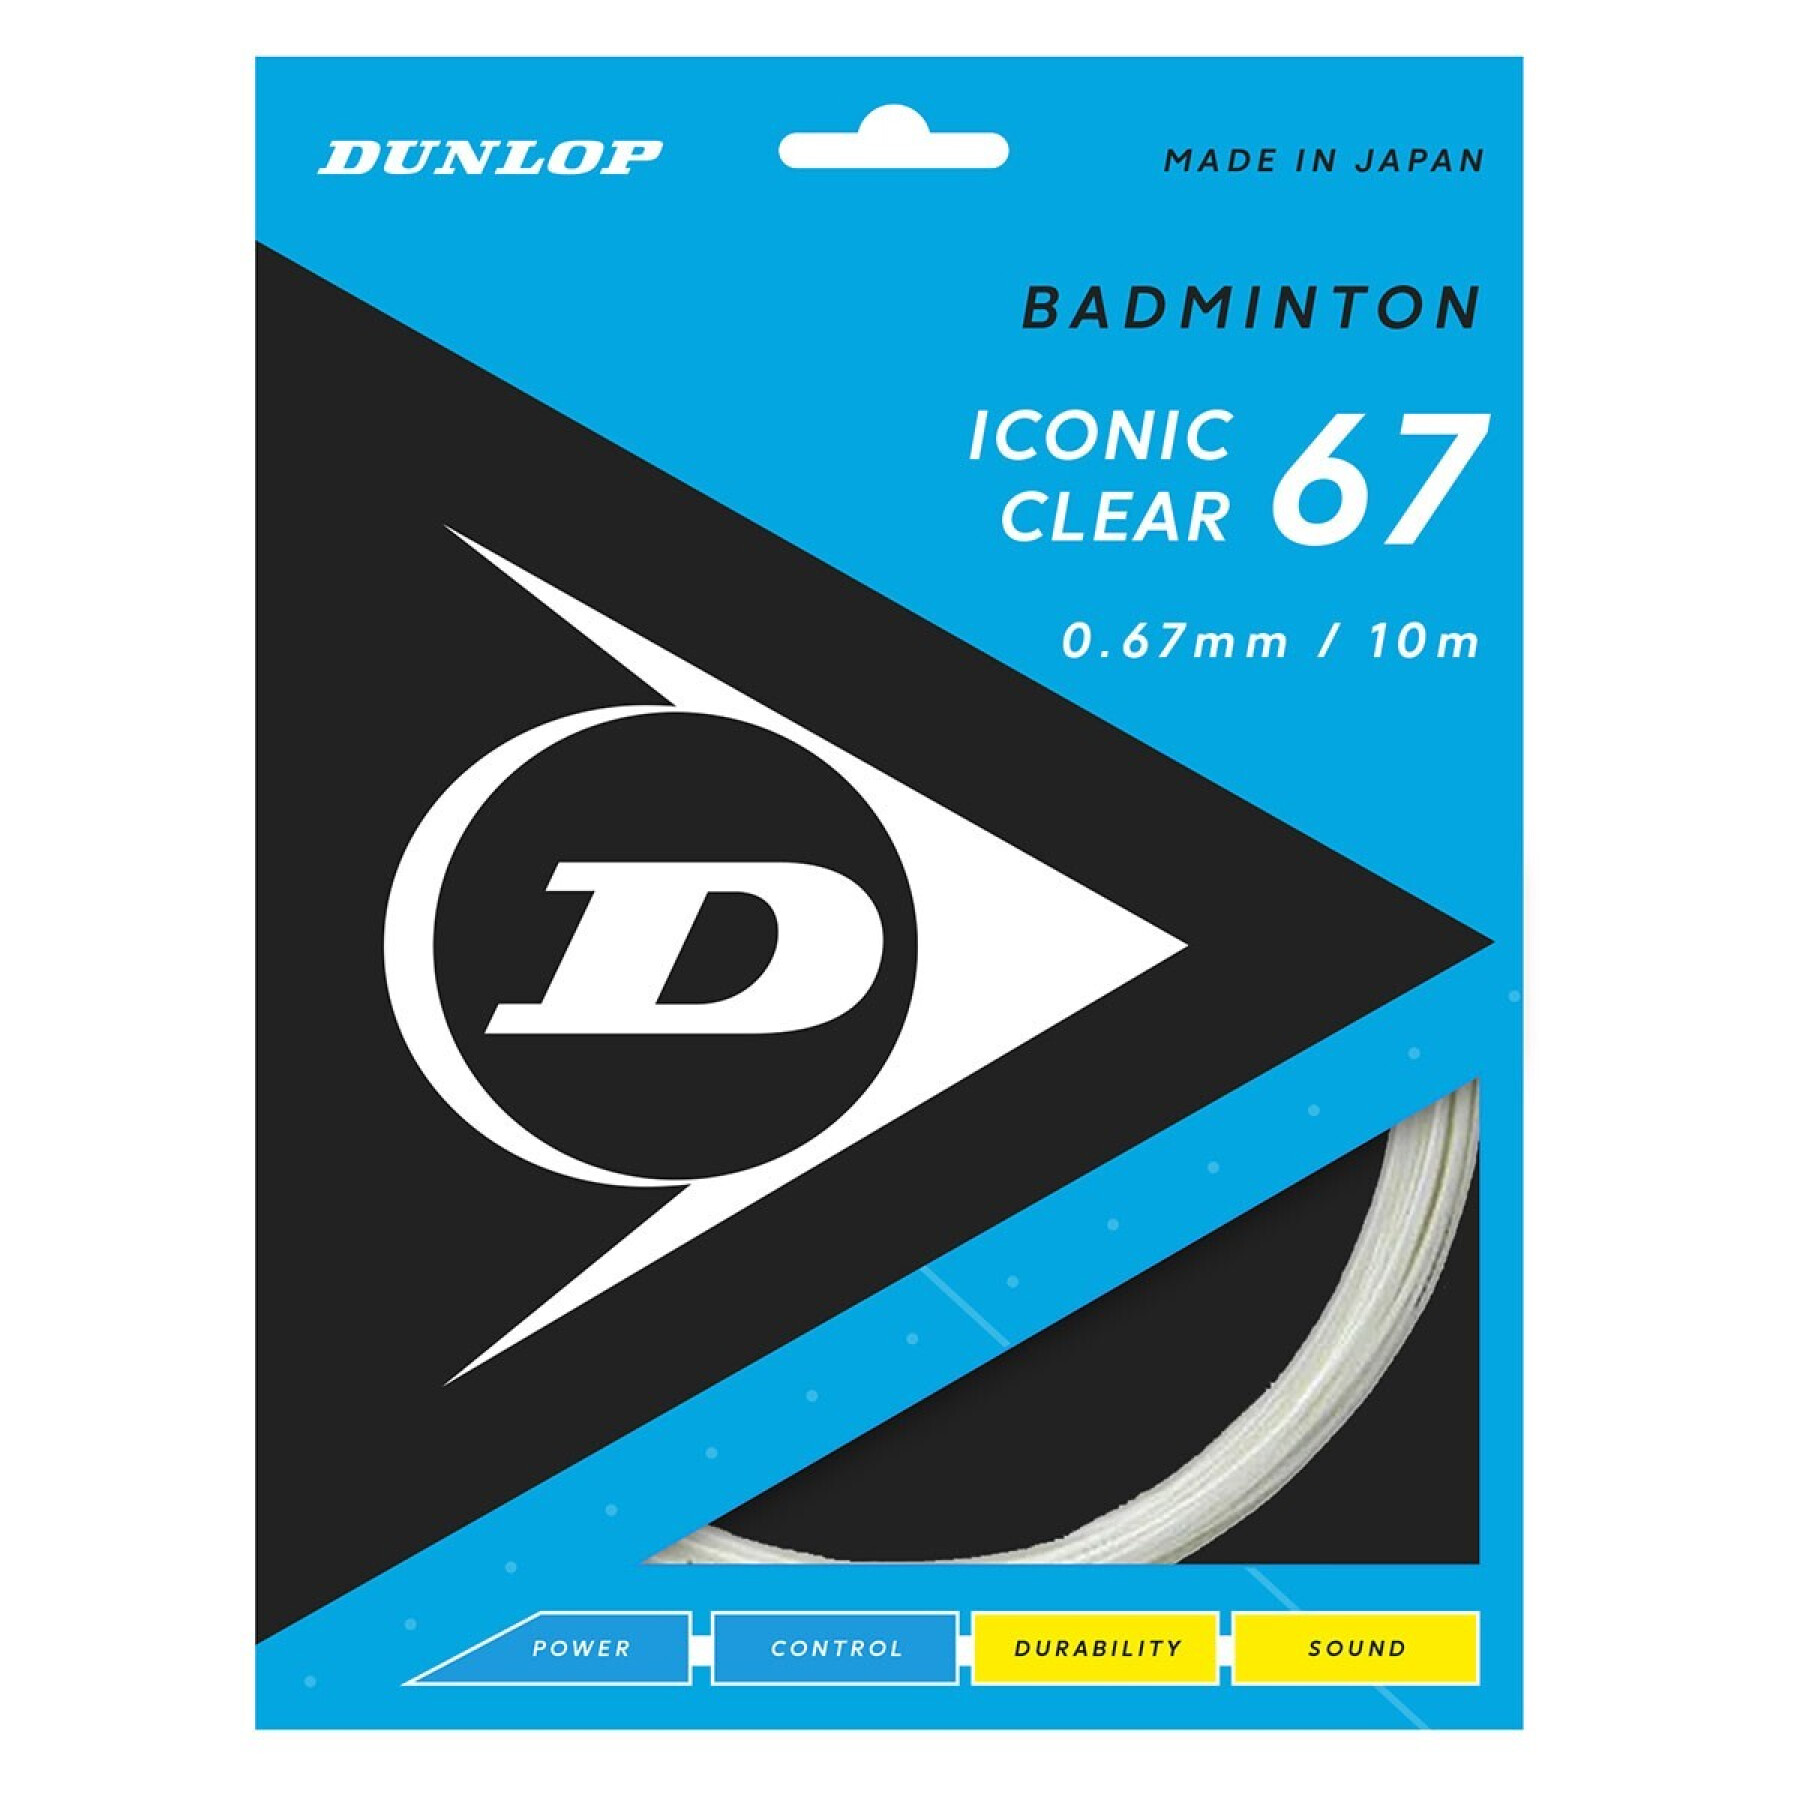 Corde da badminton Dunlop Iconic Clear 10 m